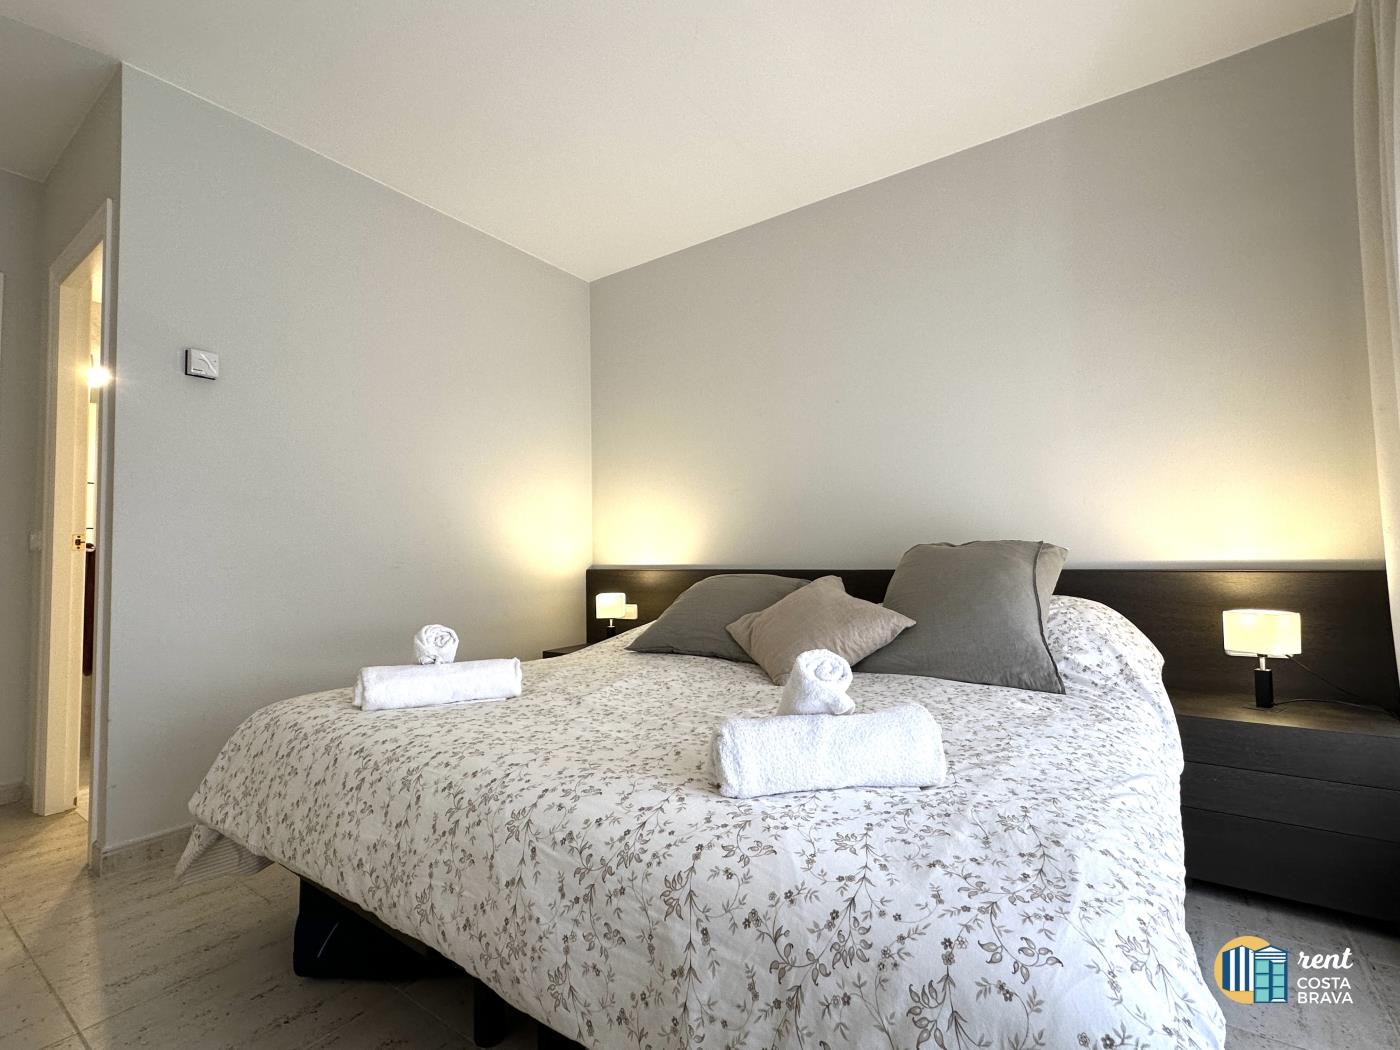 Sant Antoni flat with an exceptional location in Sant Antoni de Calonge